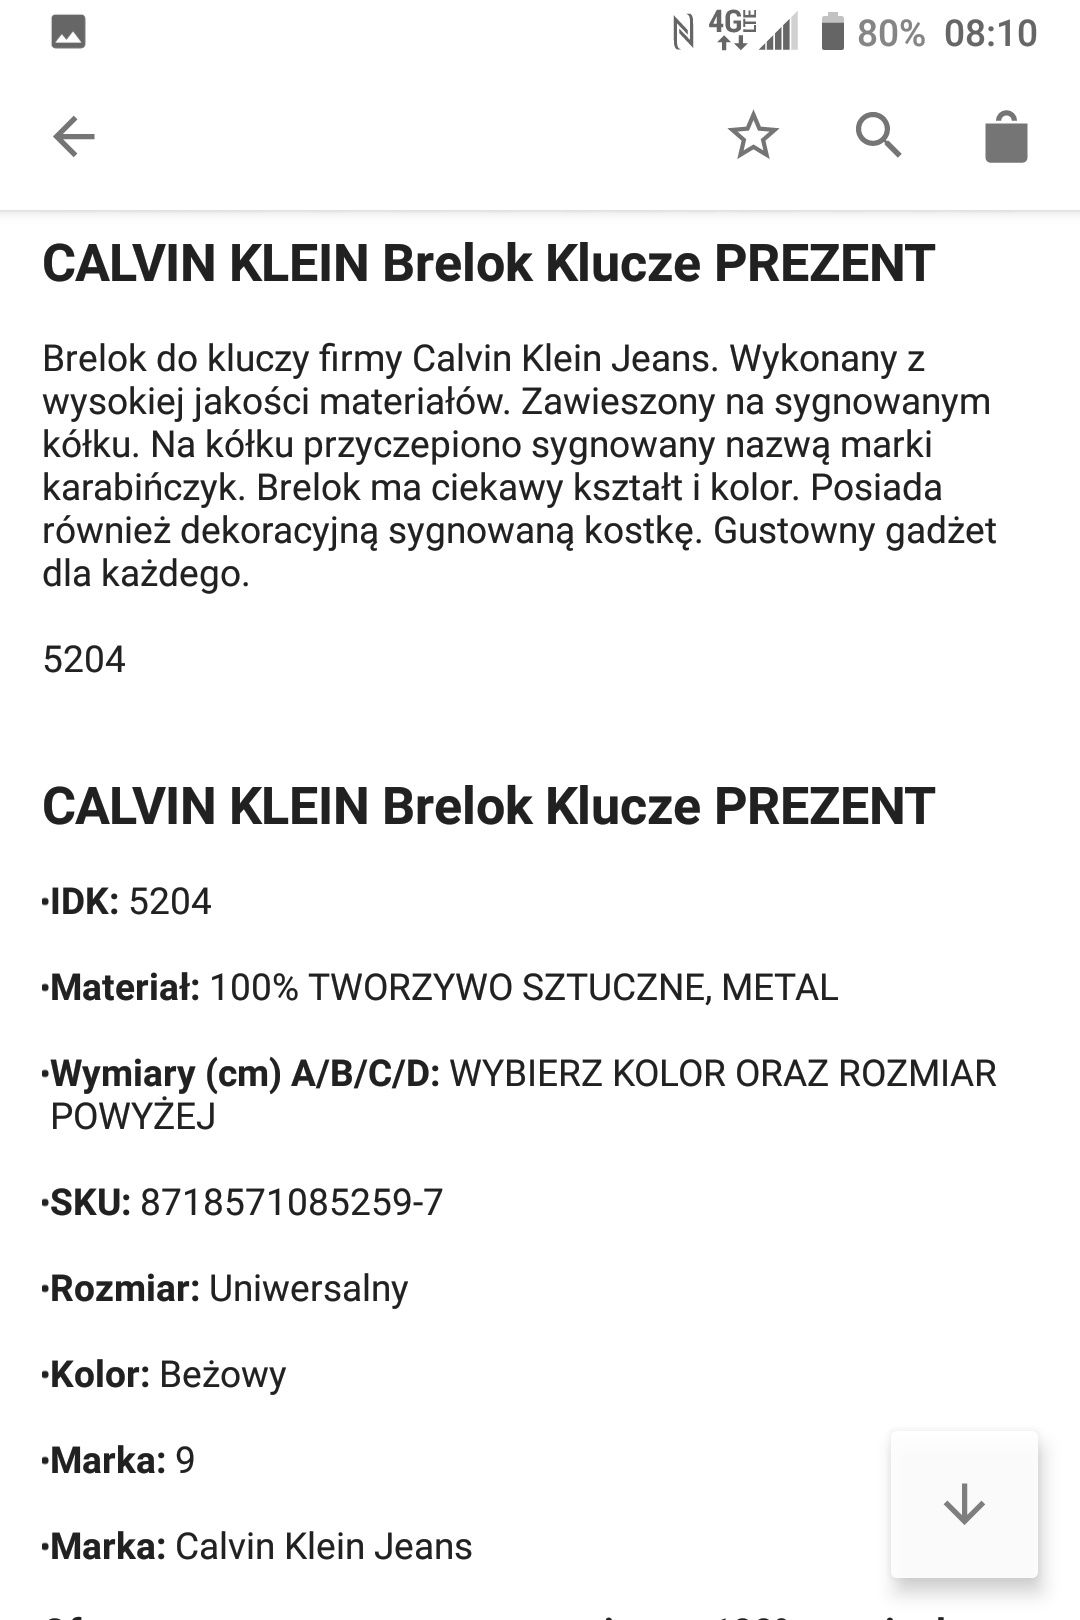 Breloczek Calvin Klein Brelok